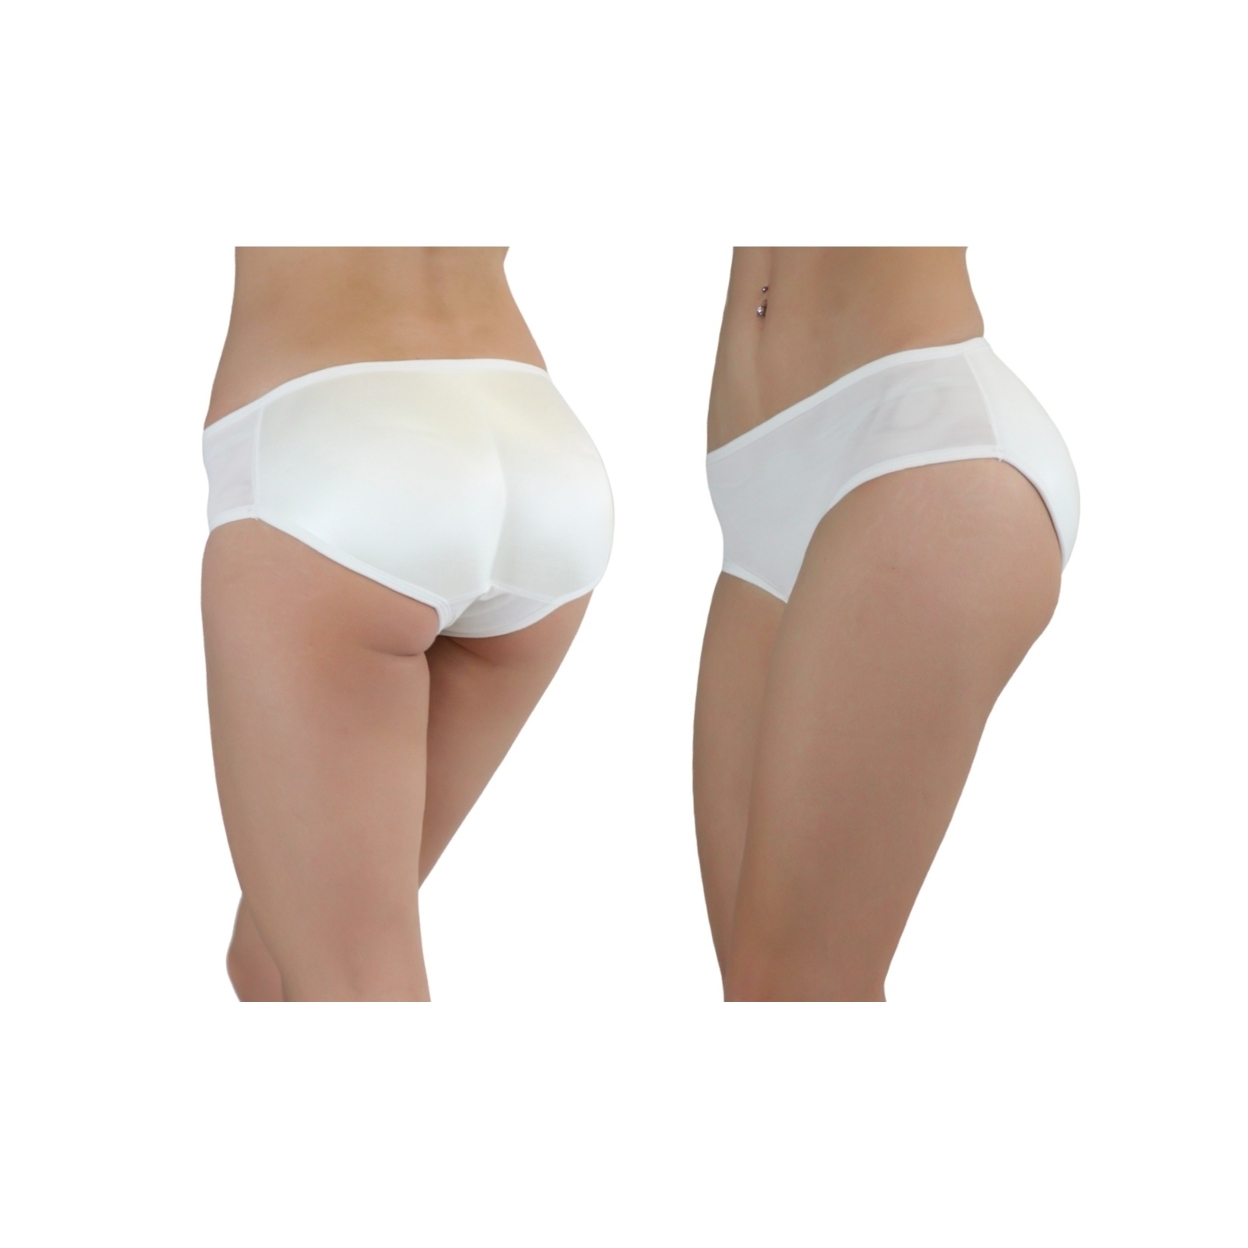 Women's Low-Rise Padded Panties - White, L